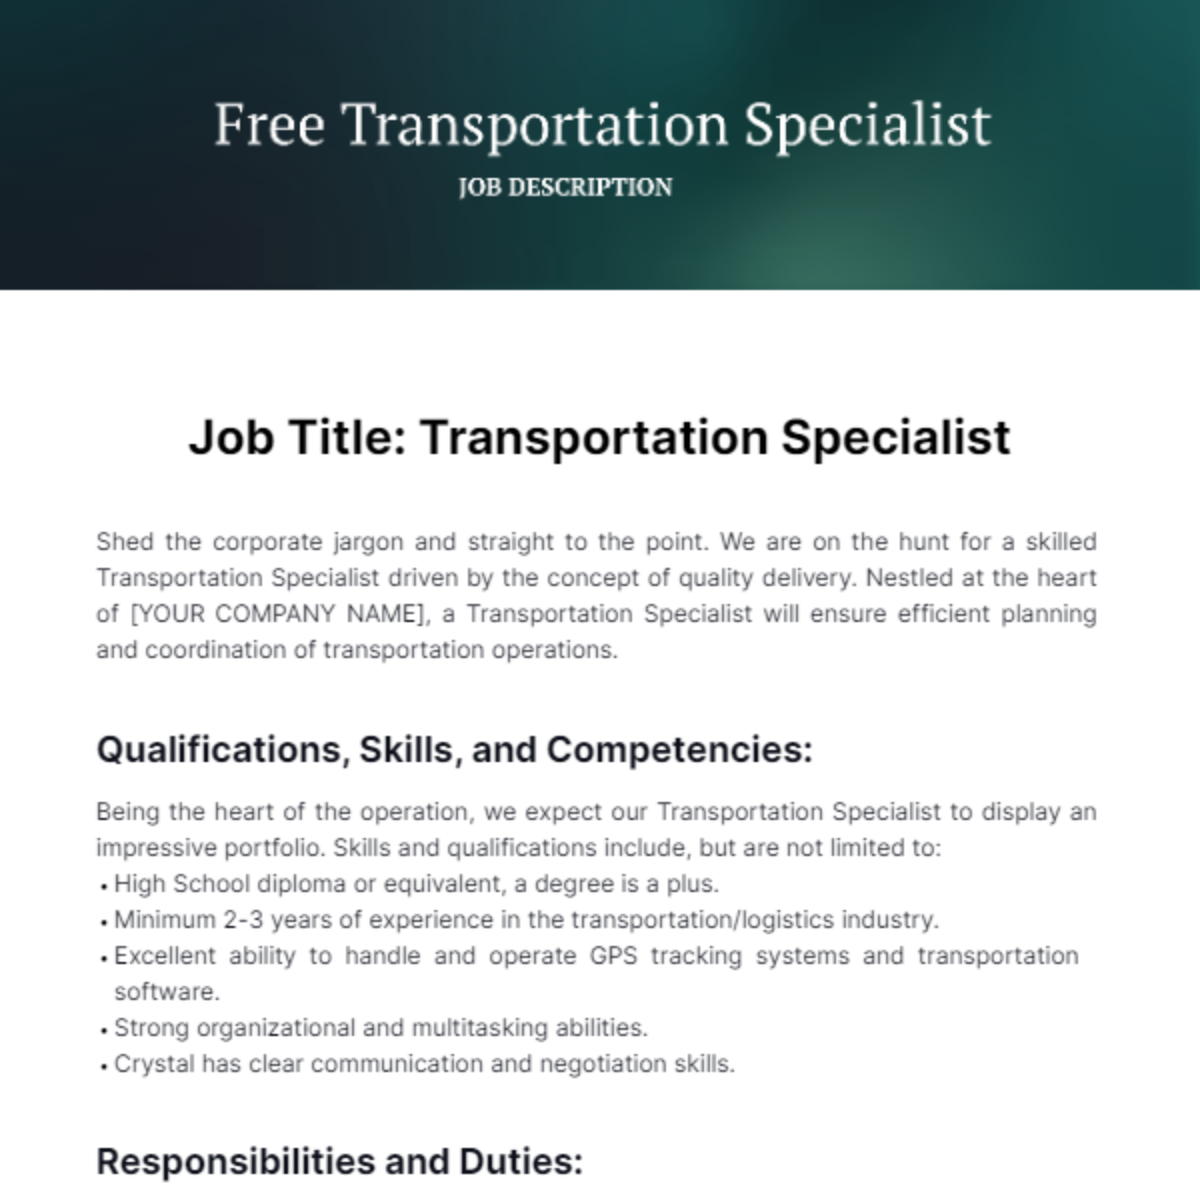 Transportation Specialist Job Description Template